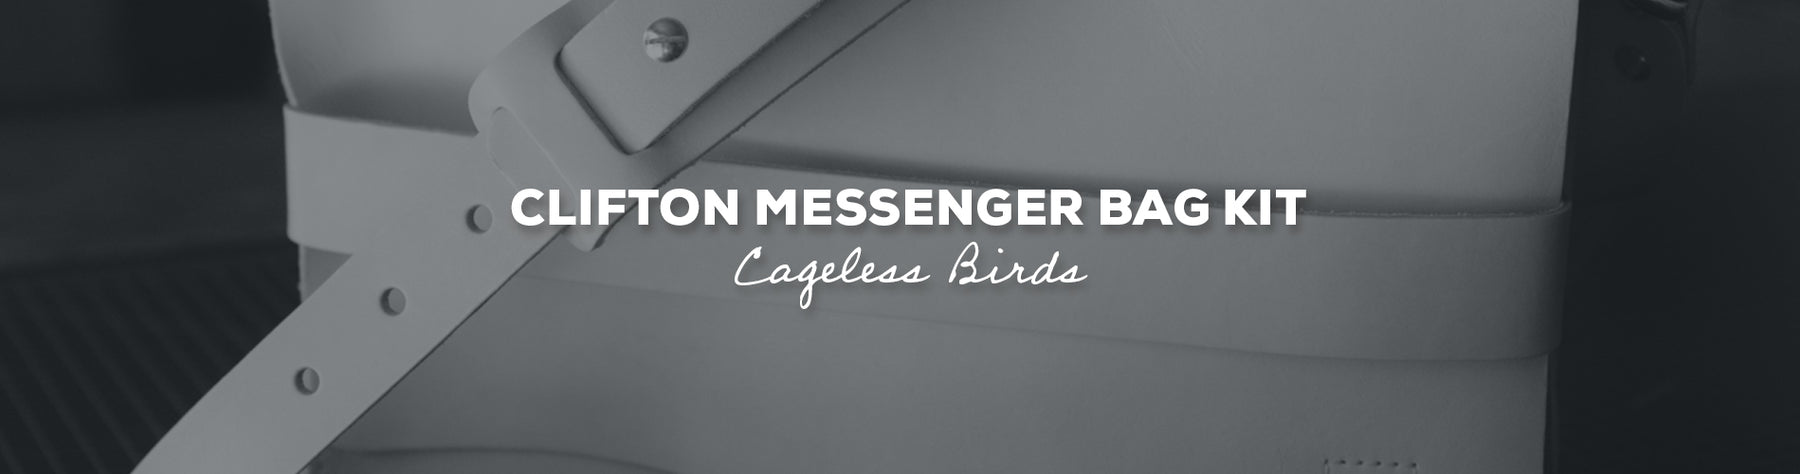 Gift Idea: Clifton Messenger Bag Kit with Cageless Birds